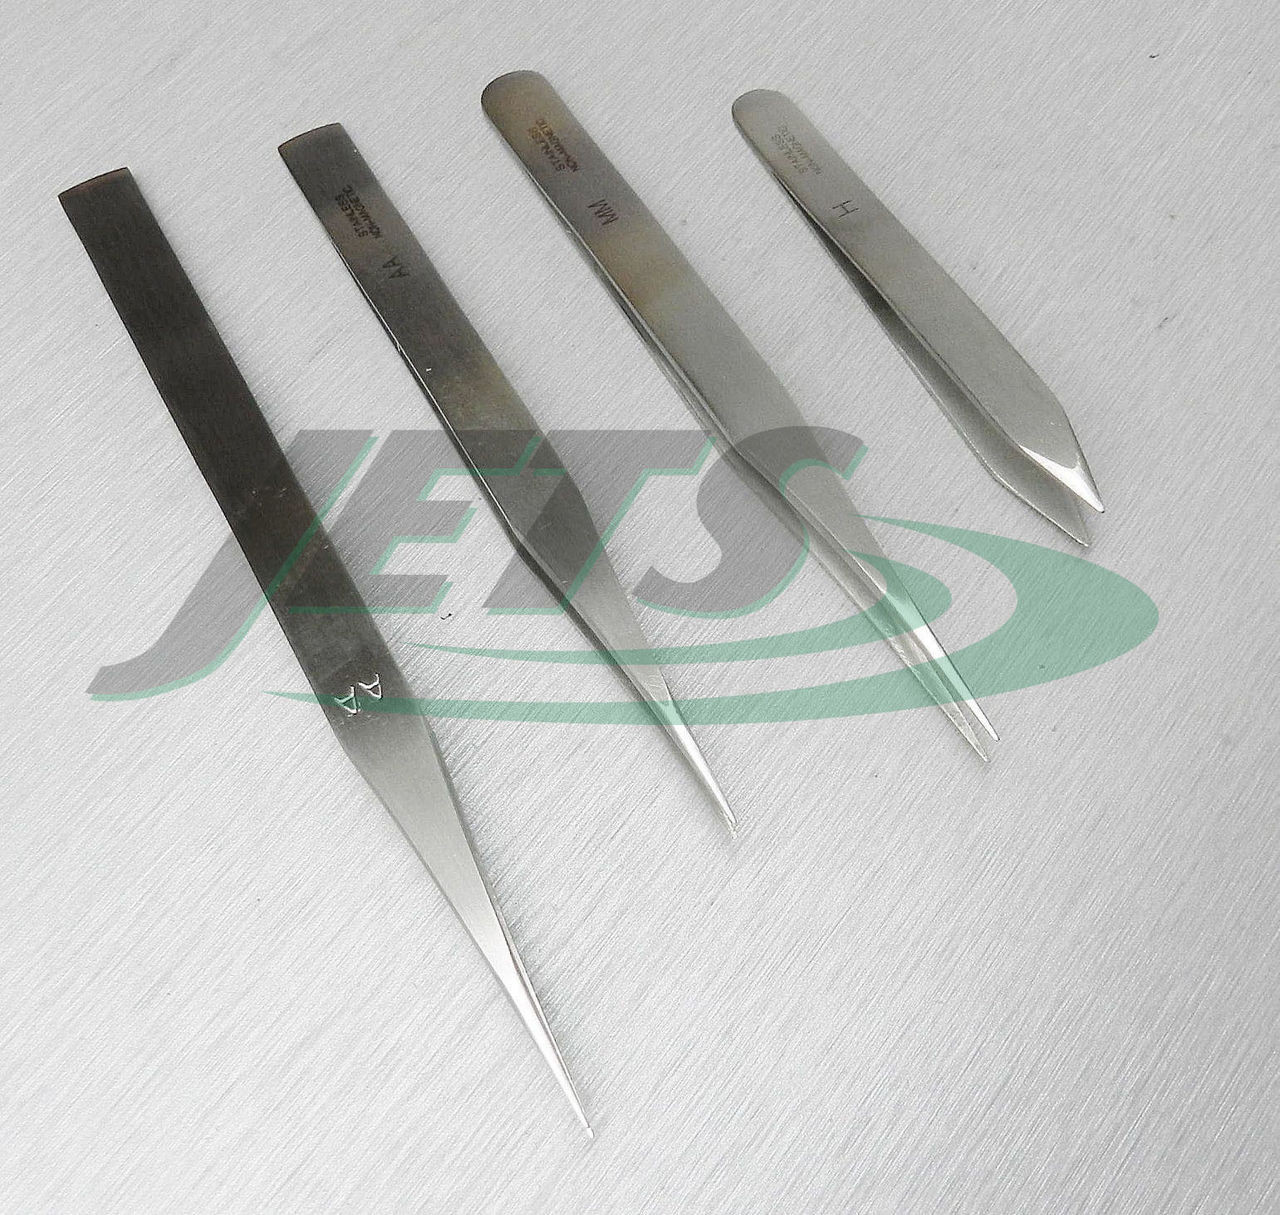 Stainless Steel Anti-Magnetic Tweezers Set,4 PCS